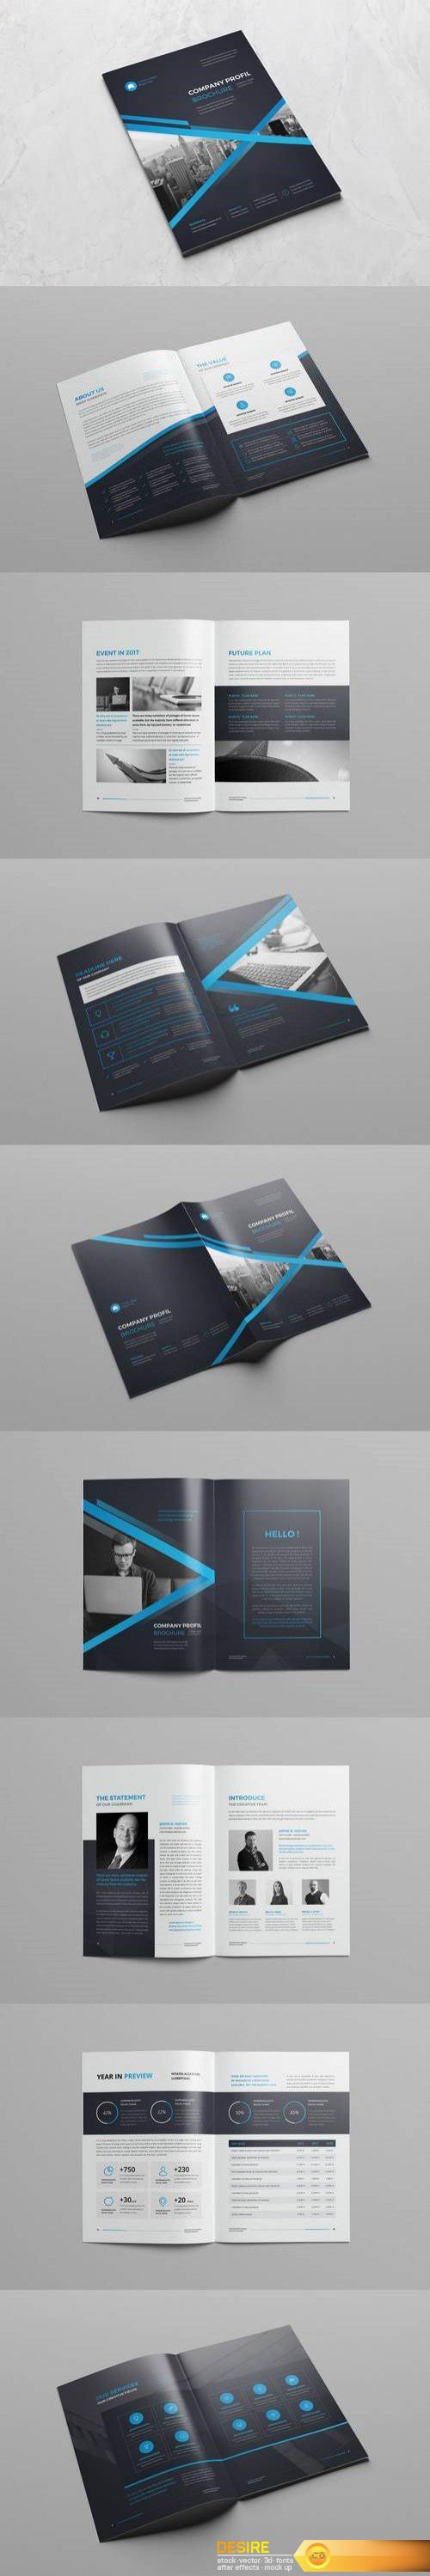 The Blue Corporate Brochure